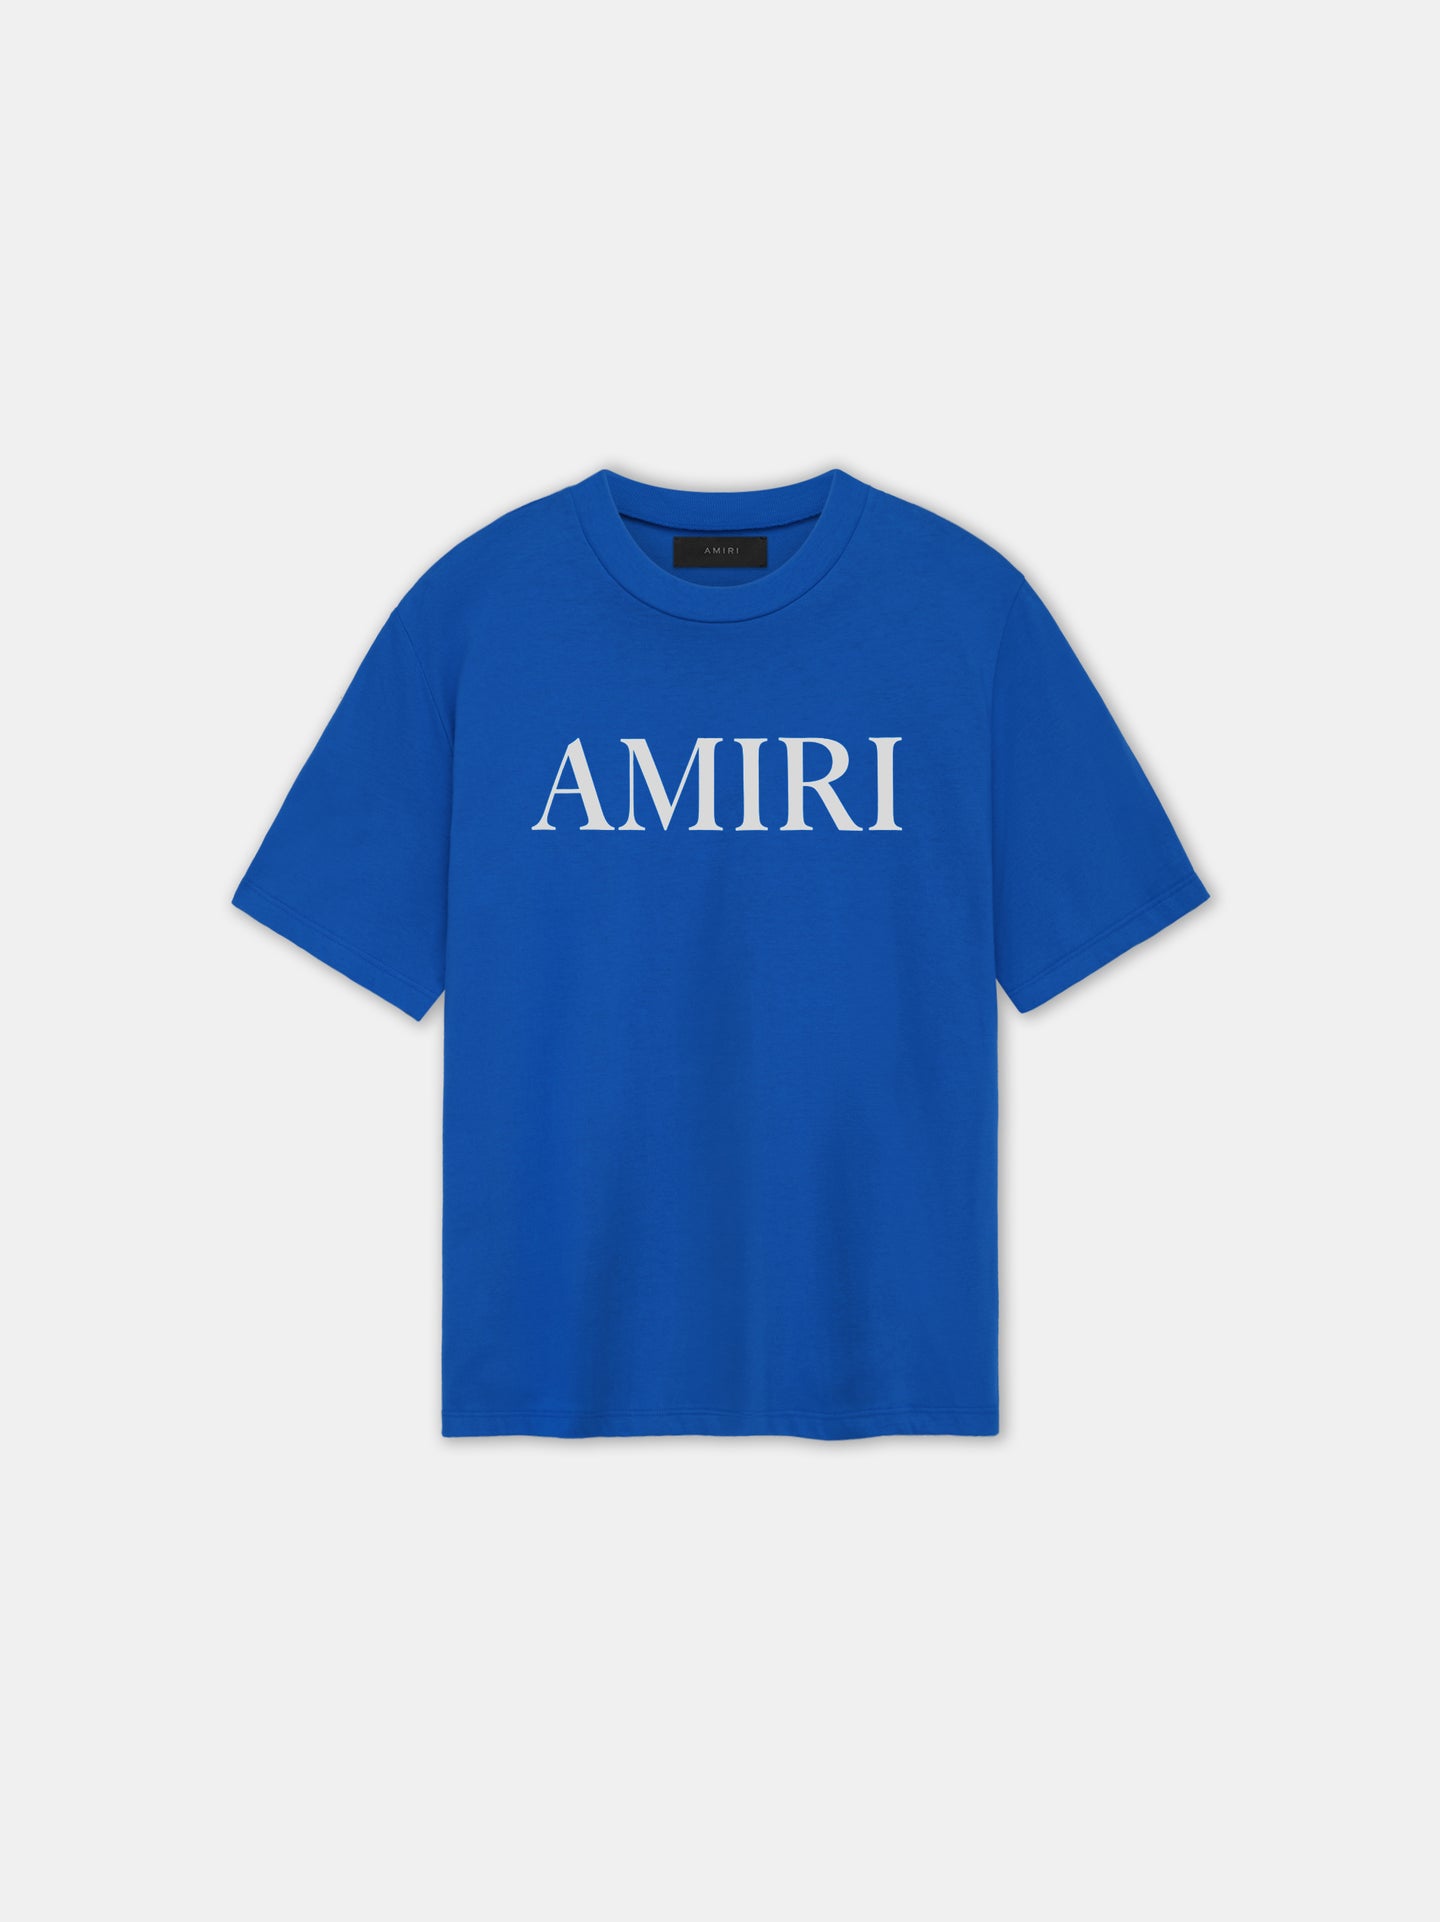 AMIRI CORE LOGO TEE - Blue